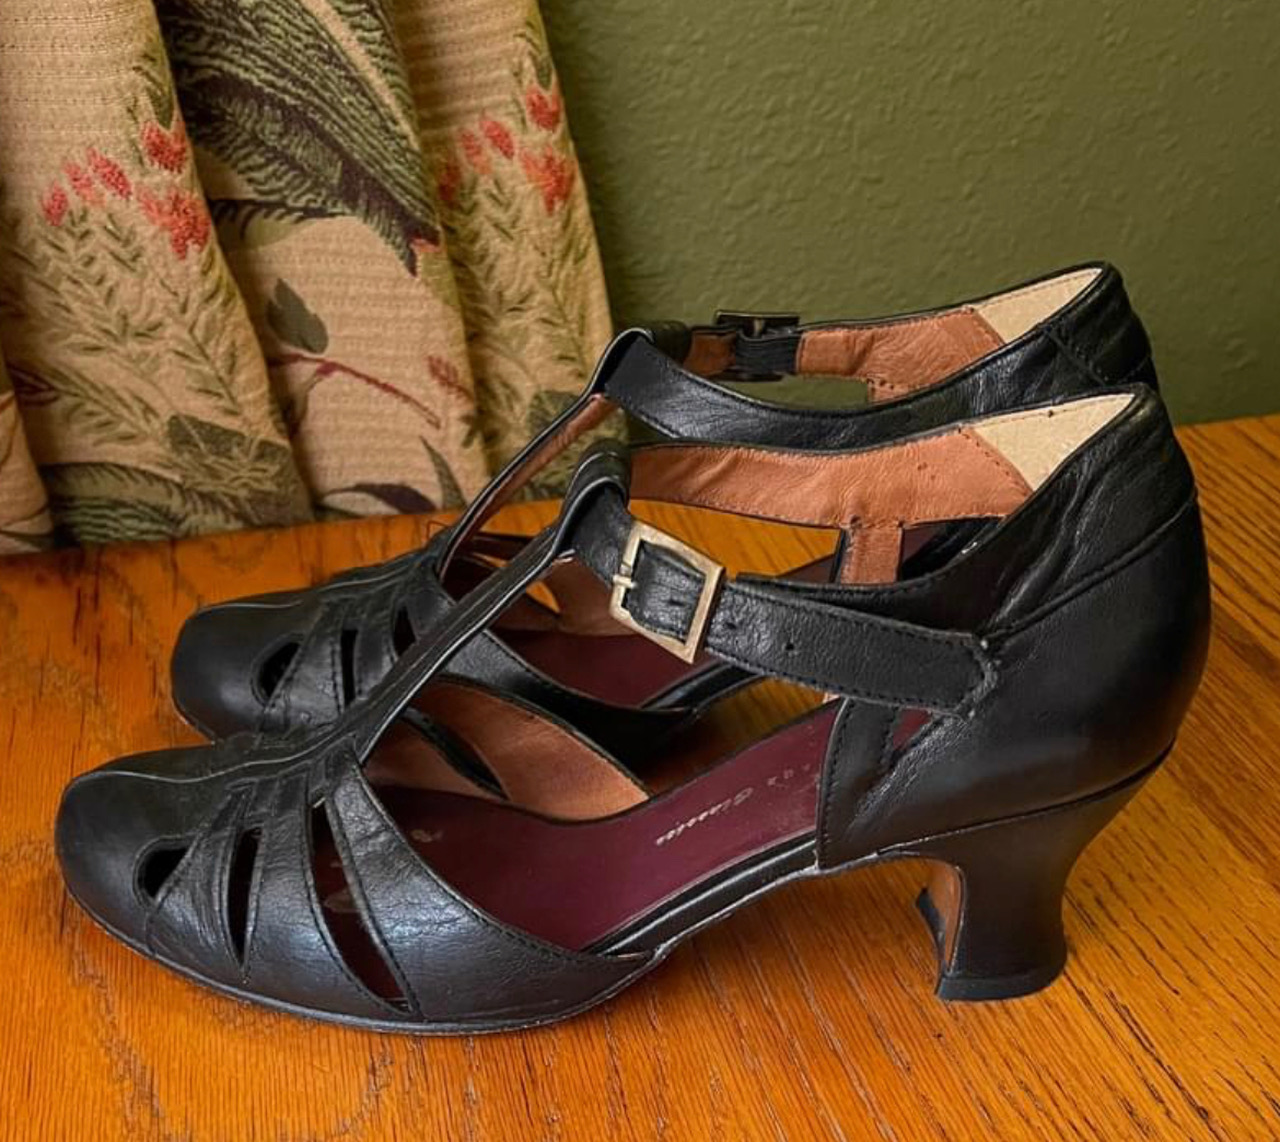 Vintage black shoes